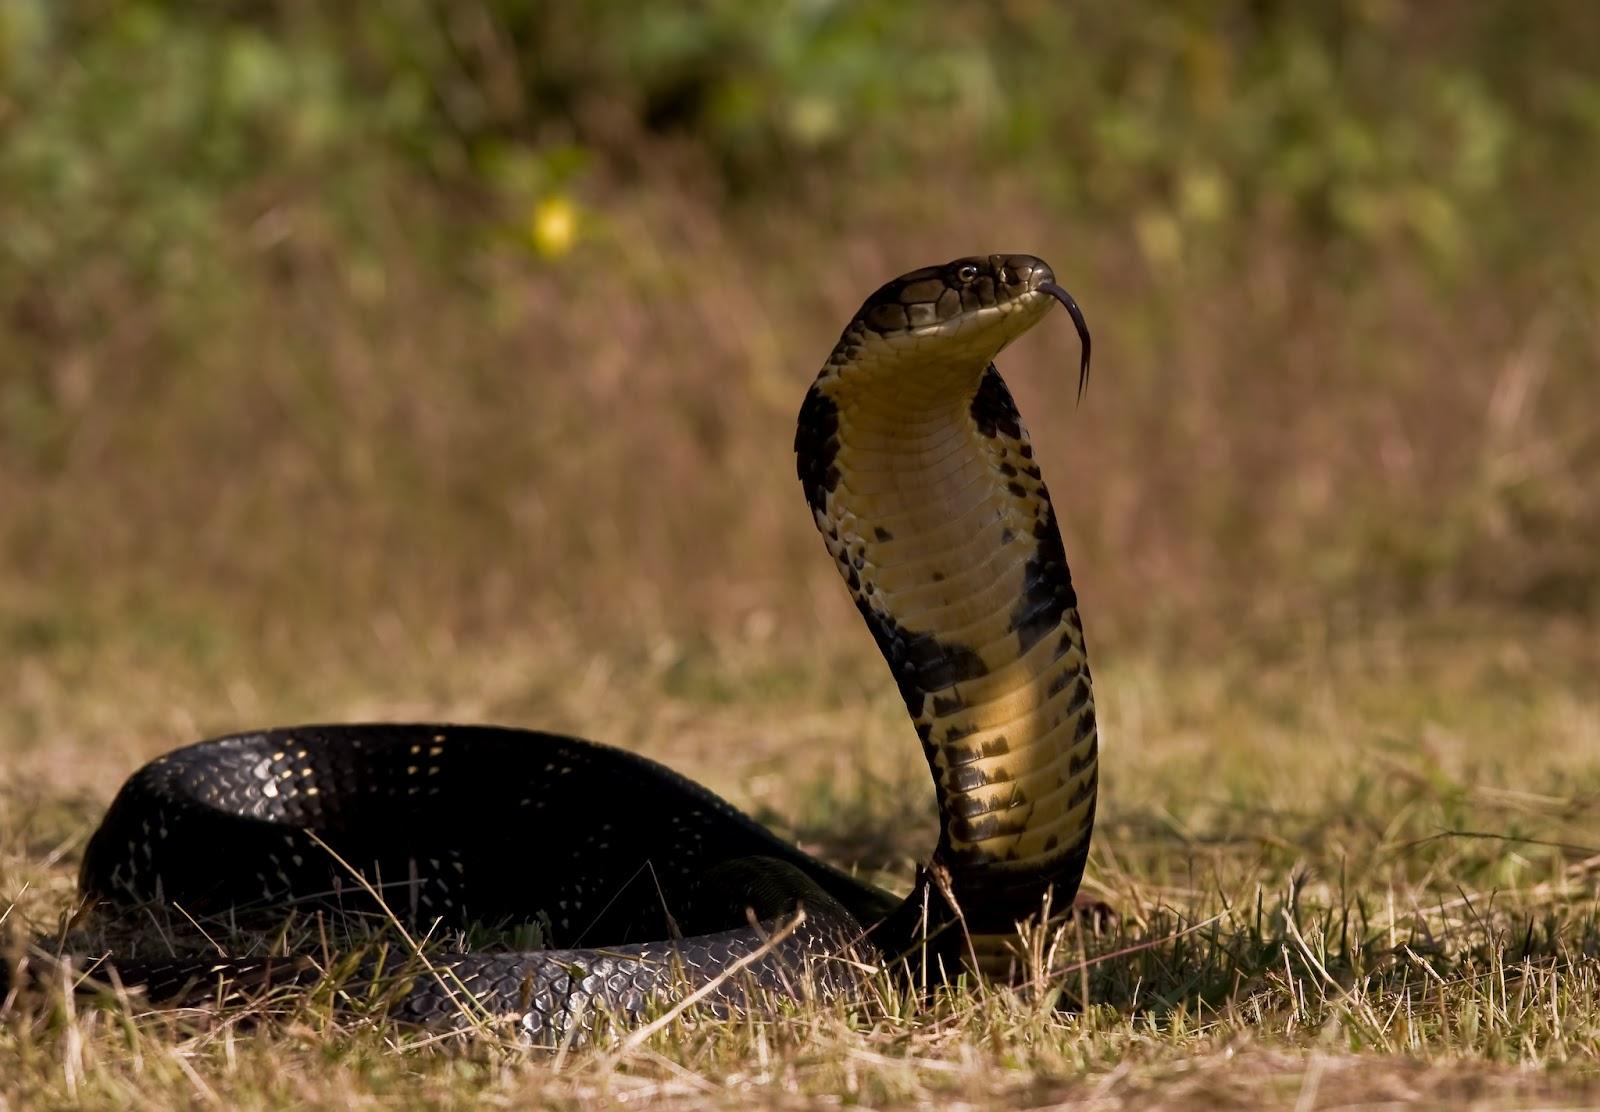 image of king cobra snake